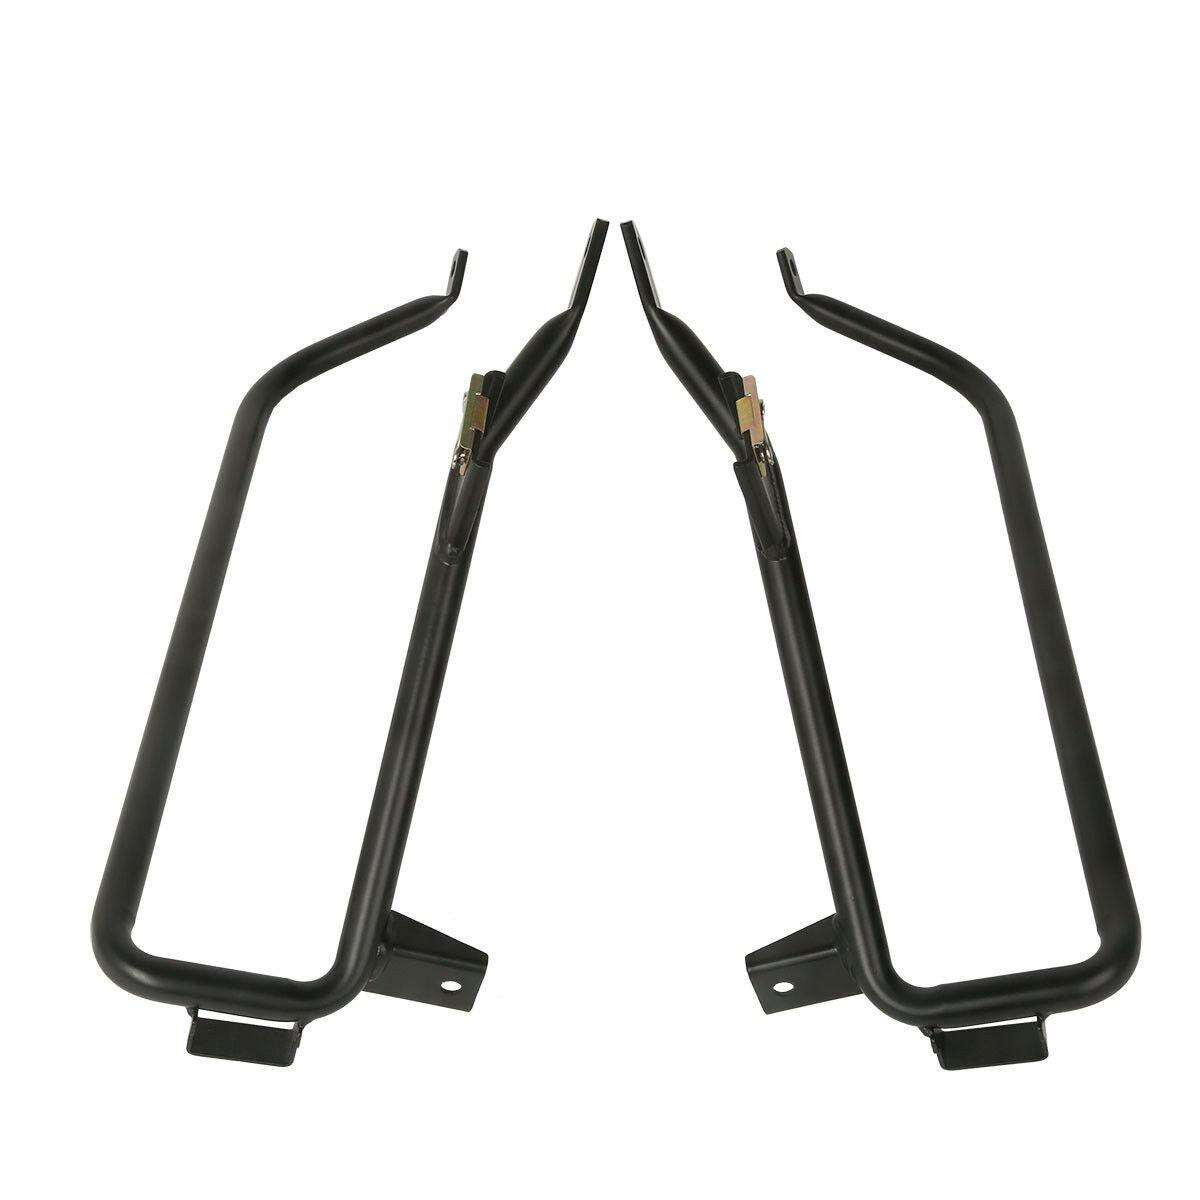 Chrome/Black Saddlebag Support Brackets Fit For Harley Road Street Glide 09-13 - Moto Life Products